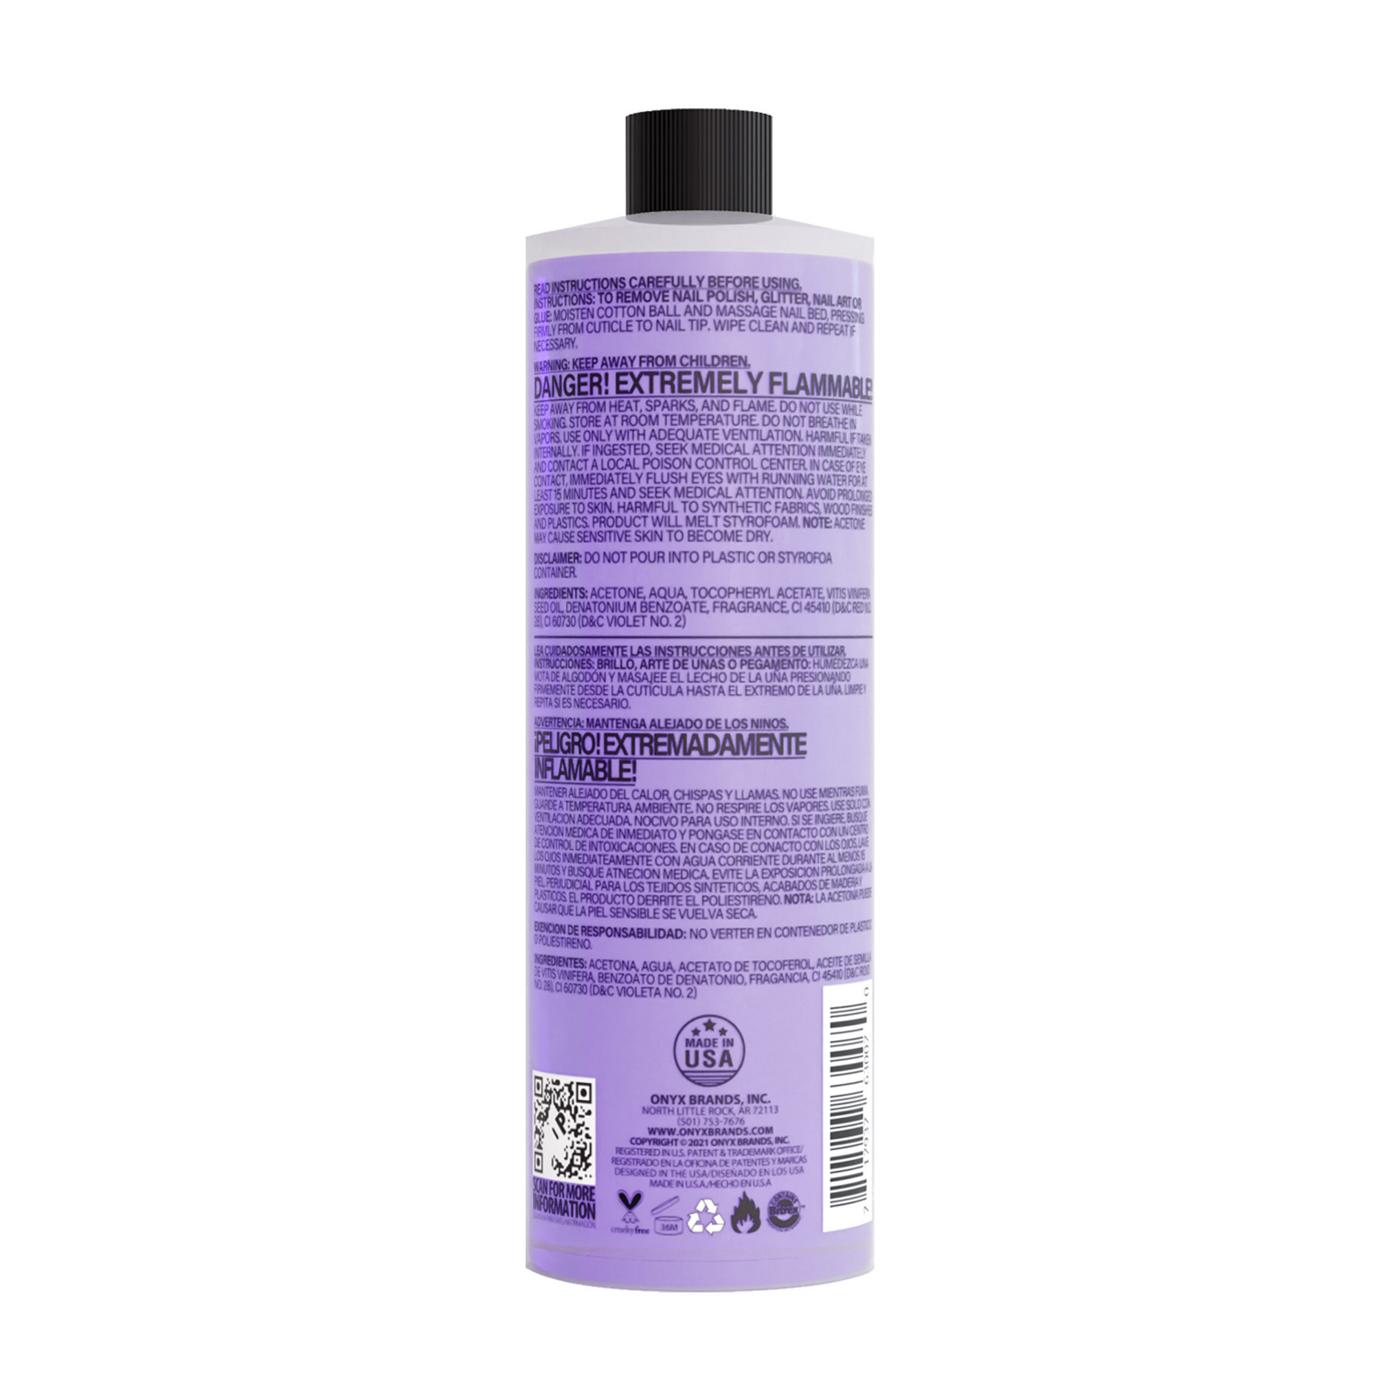 Onyx Professional Remover Moisturizing Formula Nail Polish Remover - Lavender; image 2 of 2